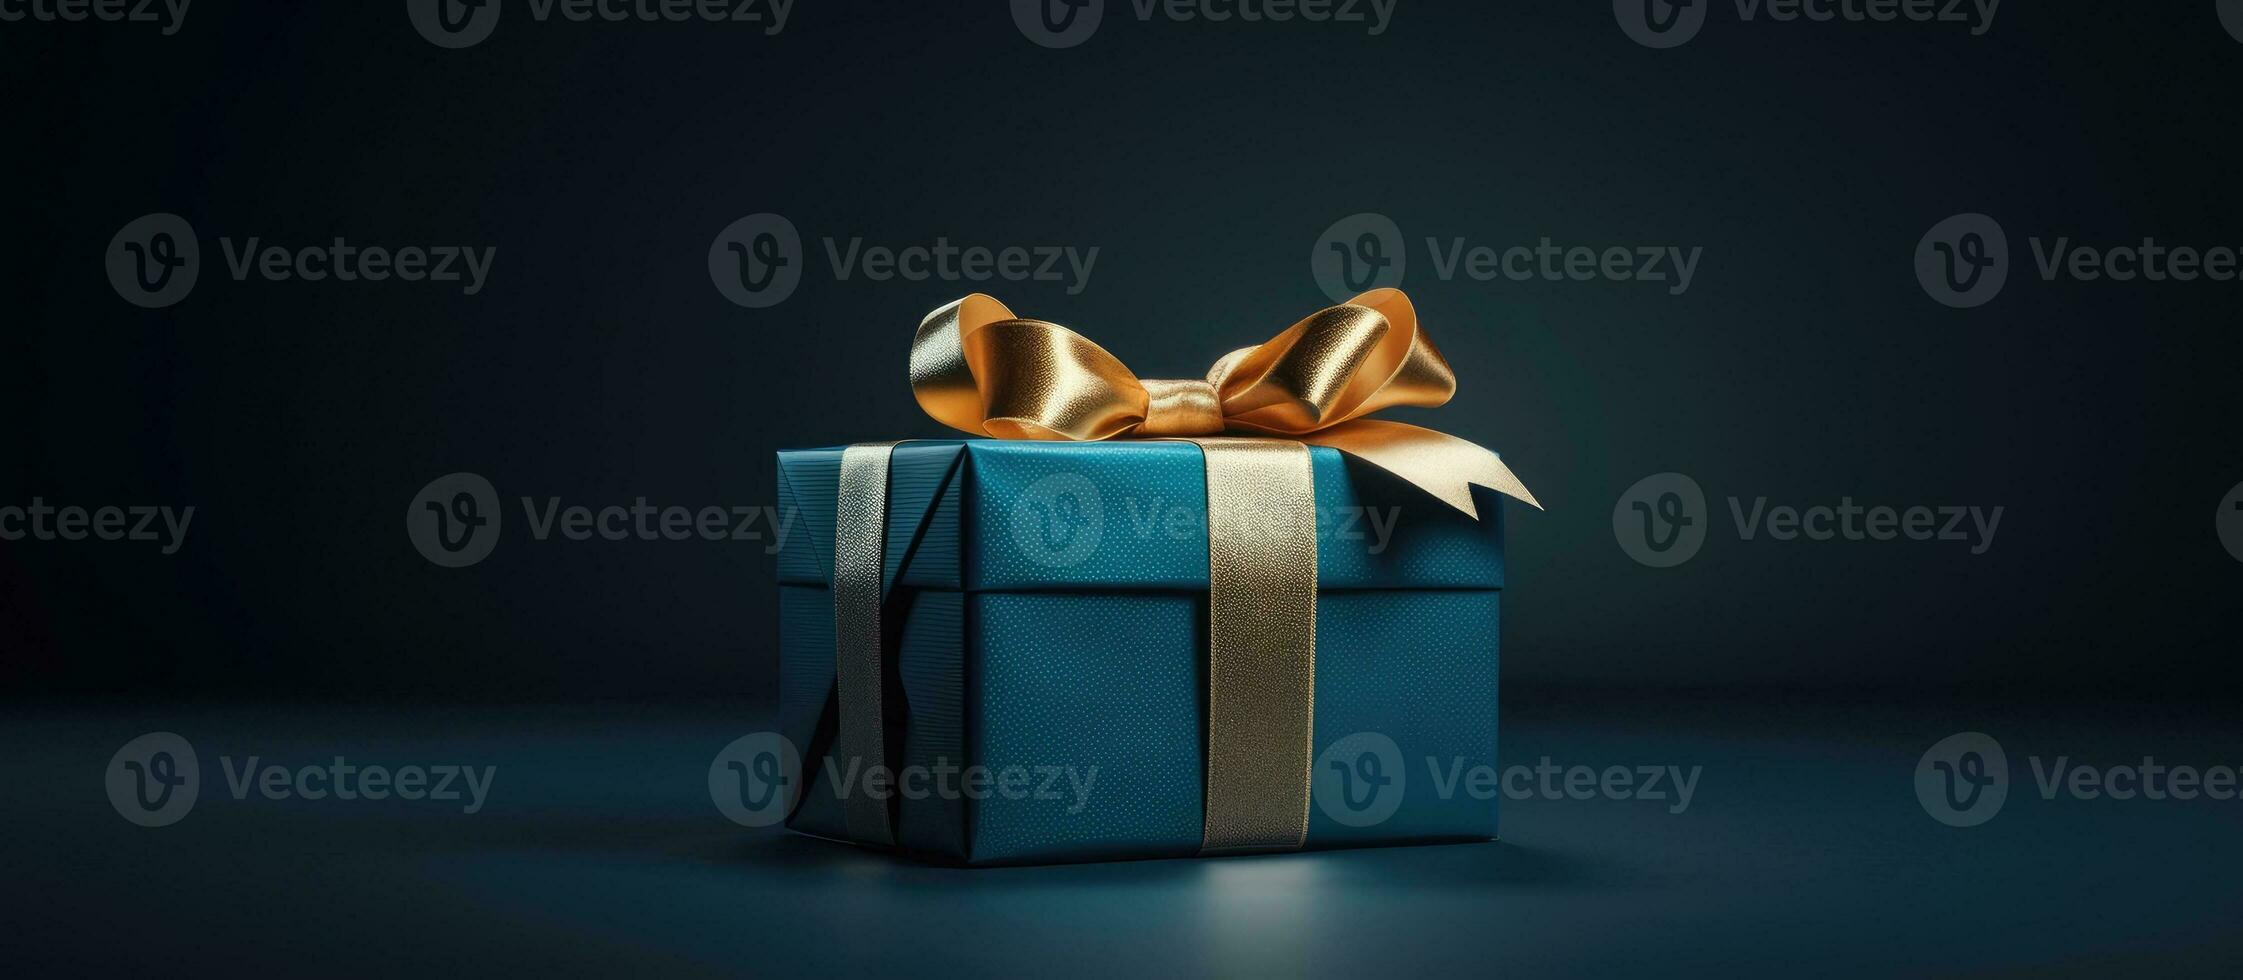 sida se svartvit bild av en små lyx gåva låda med en blå rosett på en mörk blå bakgrund. foto